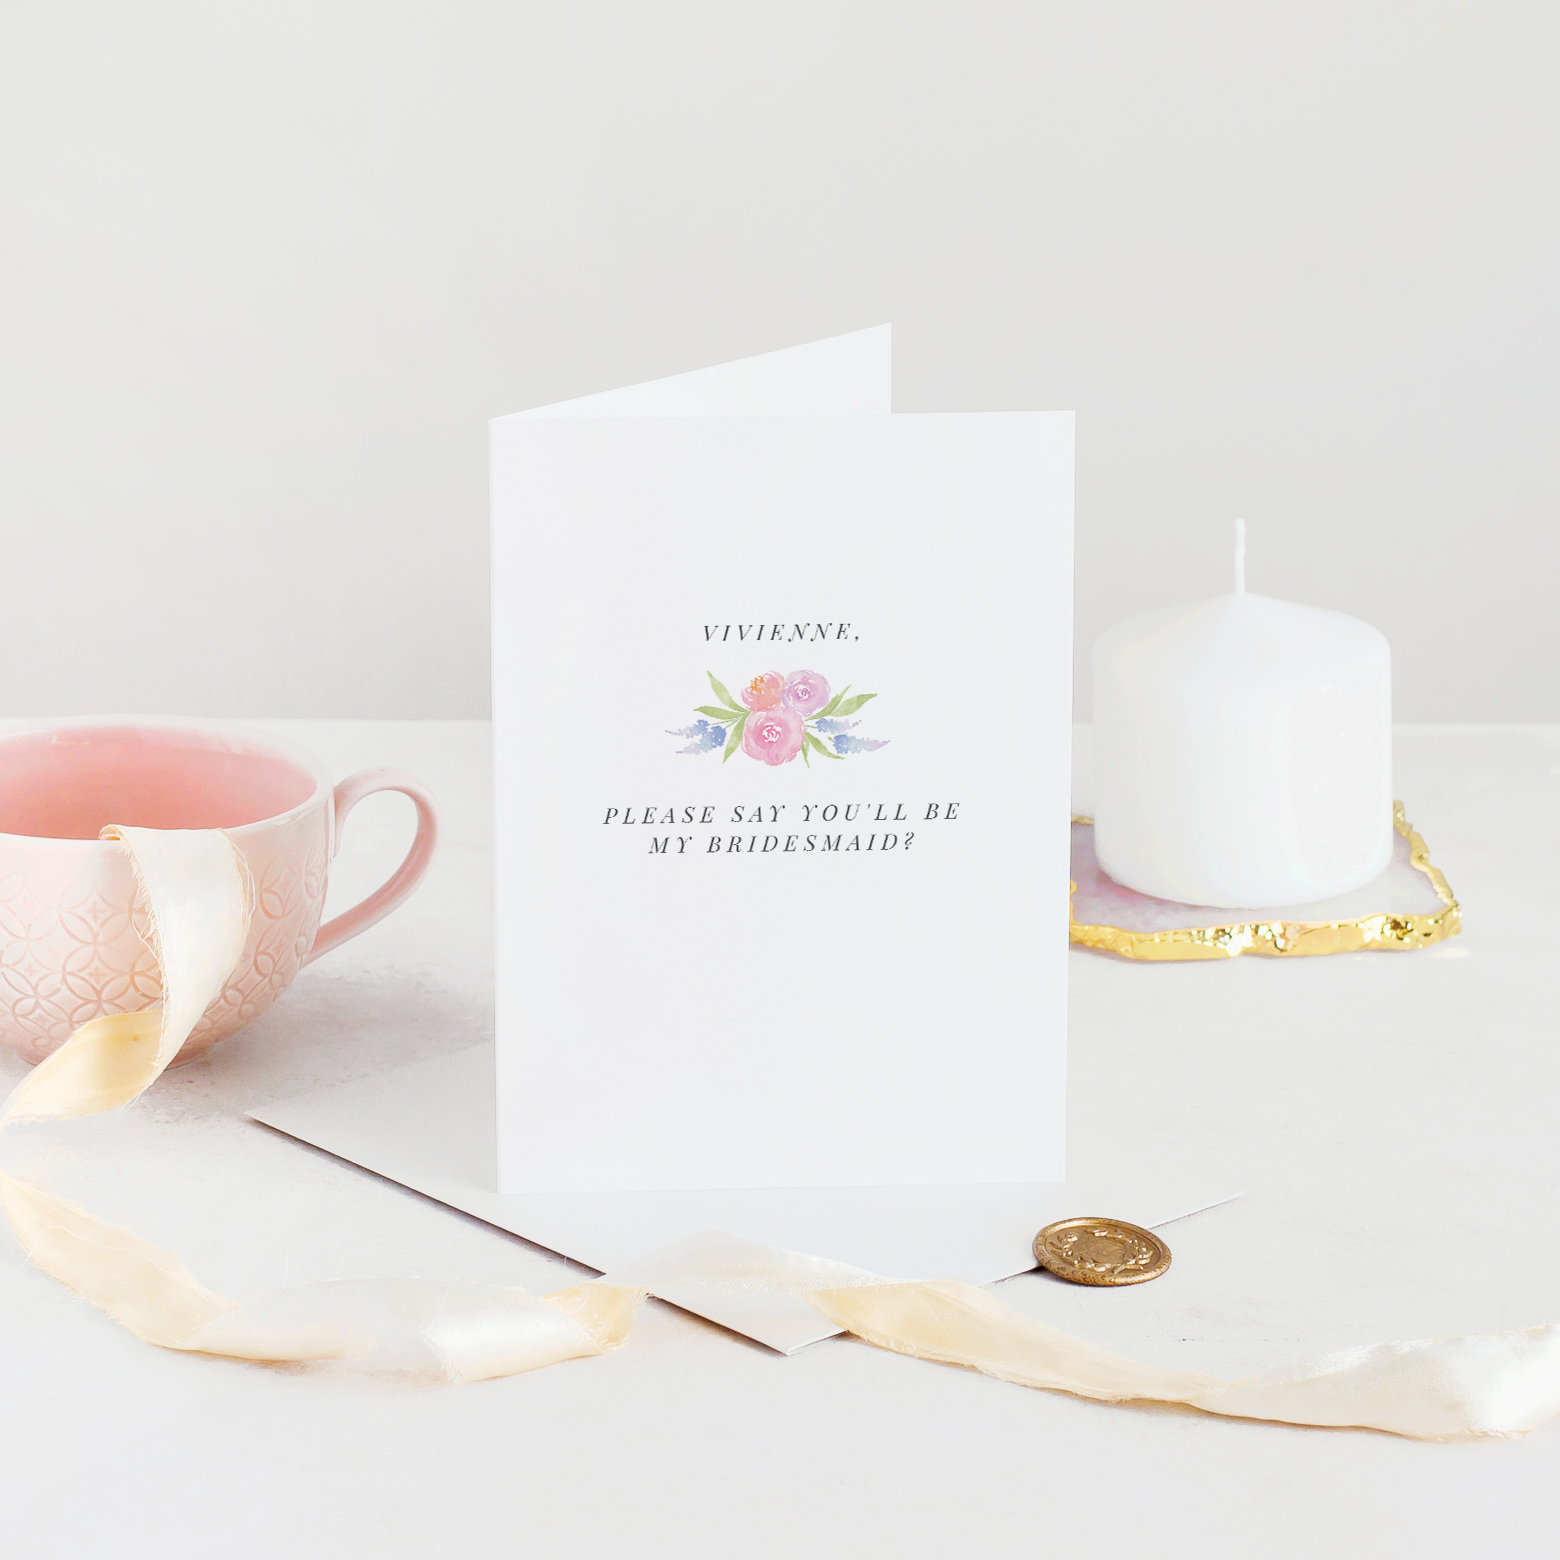 Personalised Wax Seal Bridesmaid Proposal Card, Will You Be My Bridesmaid Card, Say You'll Be My Bridesmaid Card, Card For Bridesmaid, Hand Painted Watercolour Floral Pink Standing - Bridesmaid.jpg